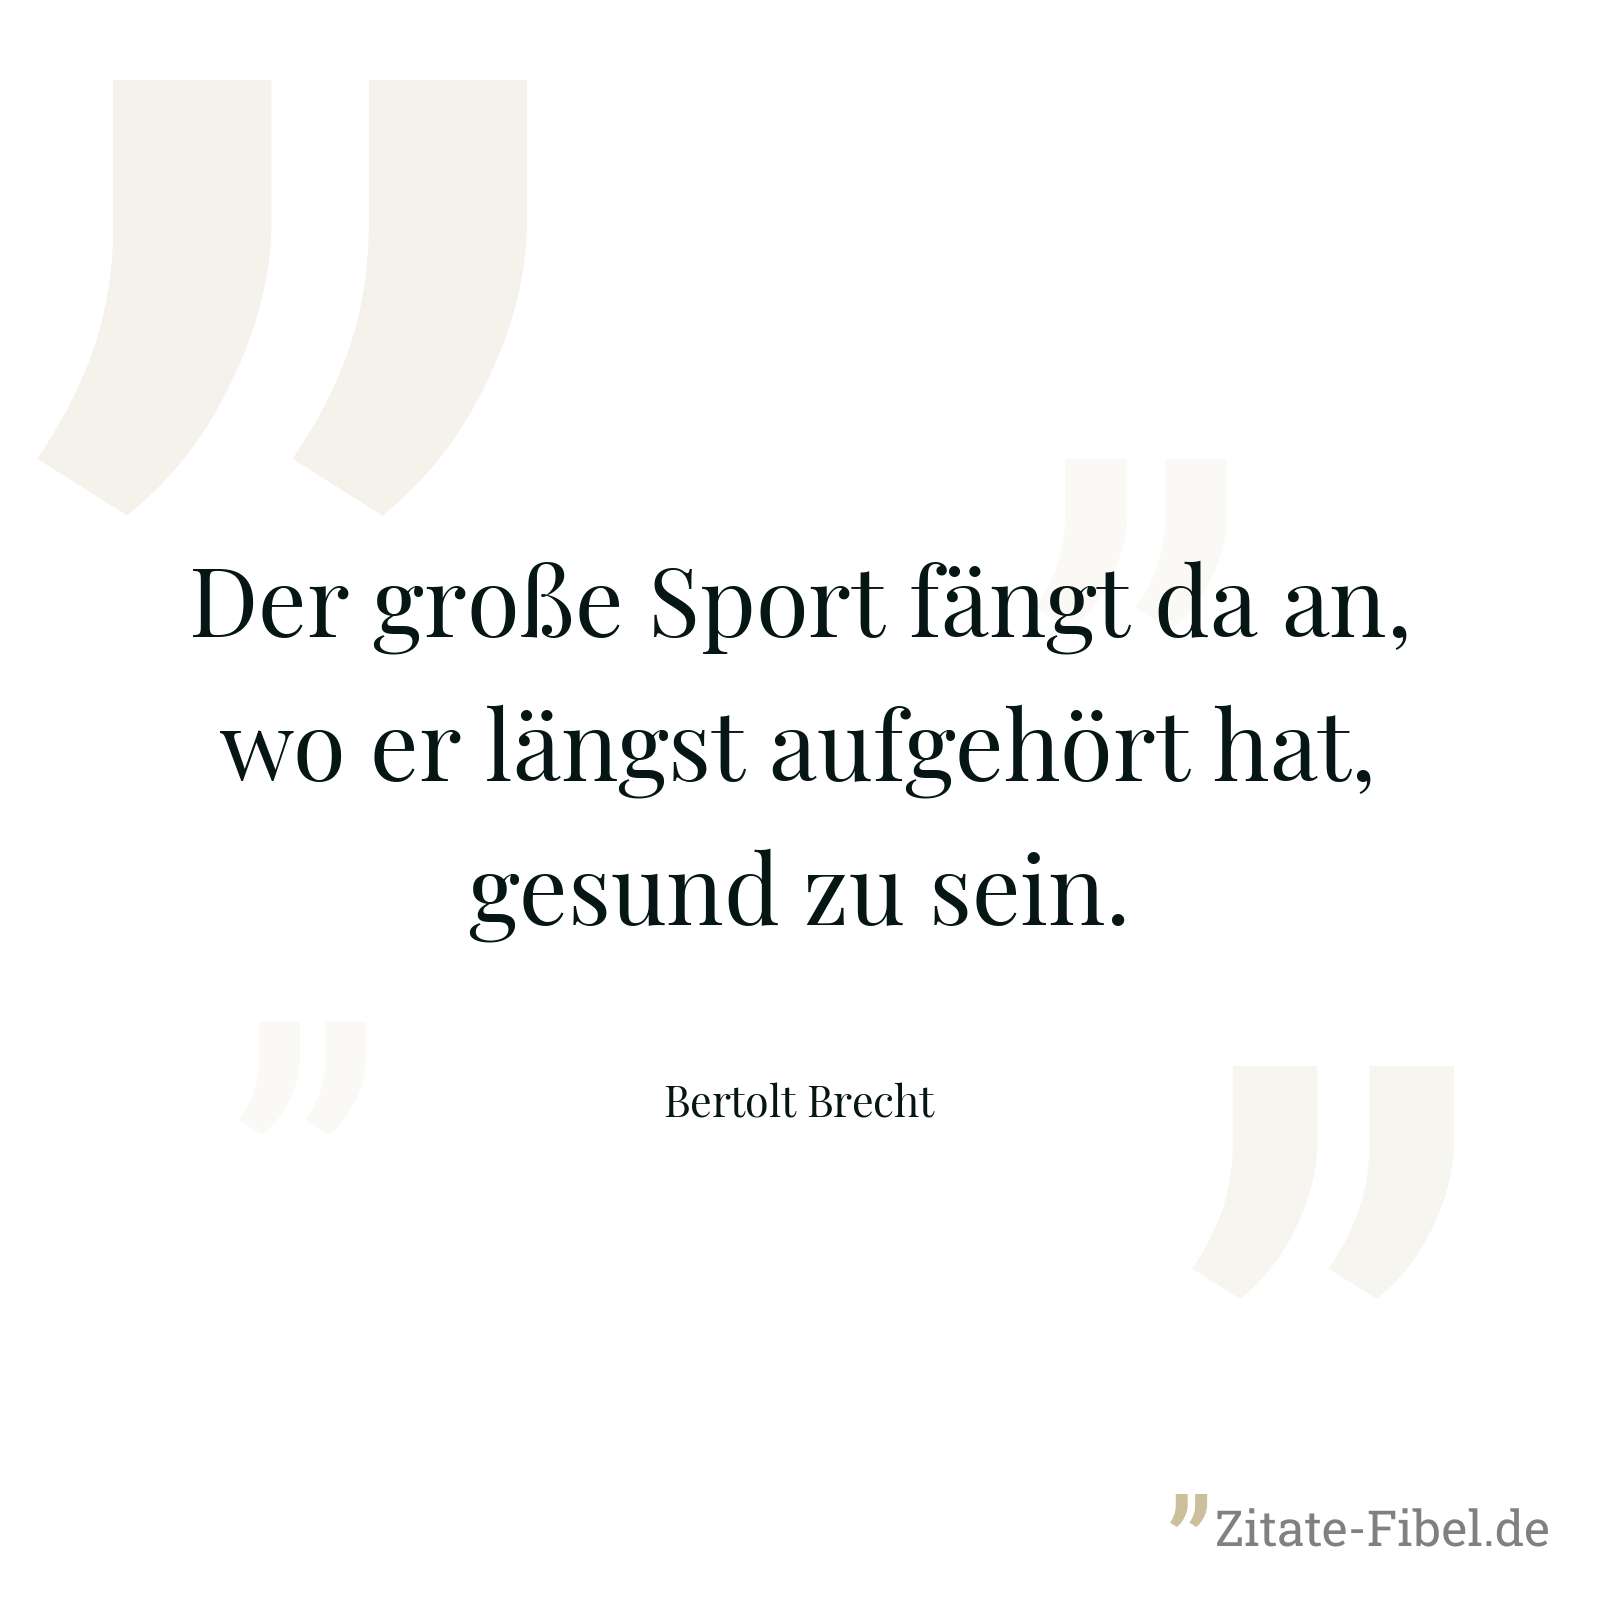 Der große Sport fängt da an, wo er längst aufgehört hat, gesund zu sein. - Bertolt Brecht